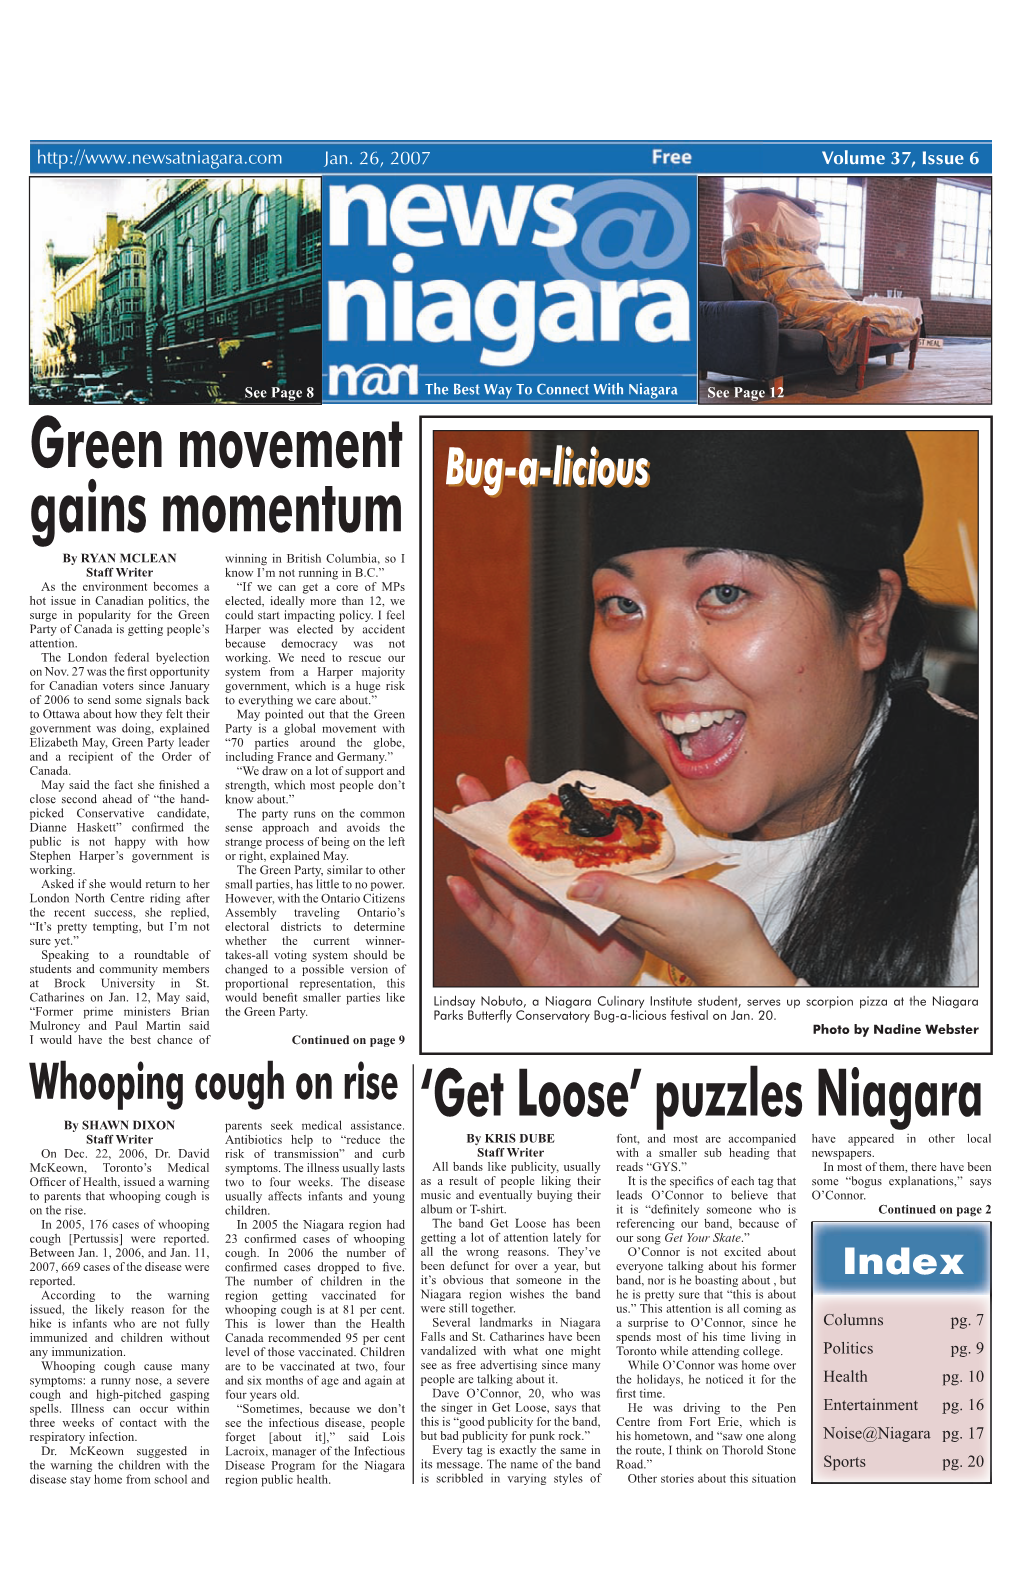 News@Niagara, Jan